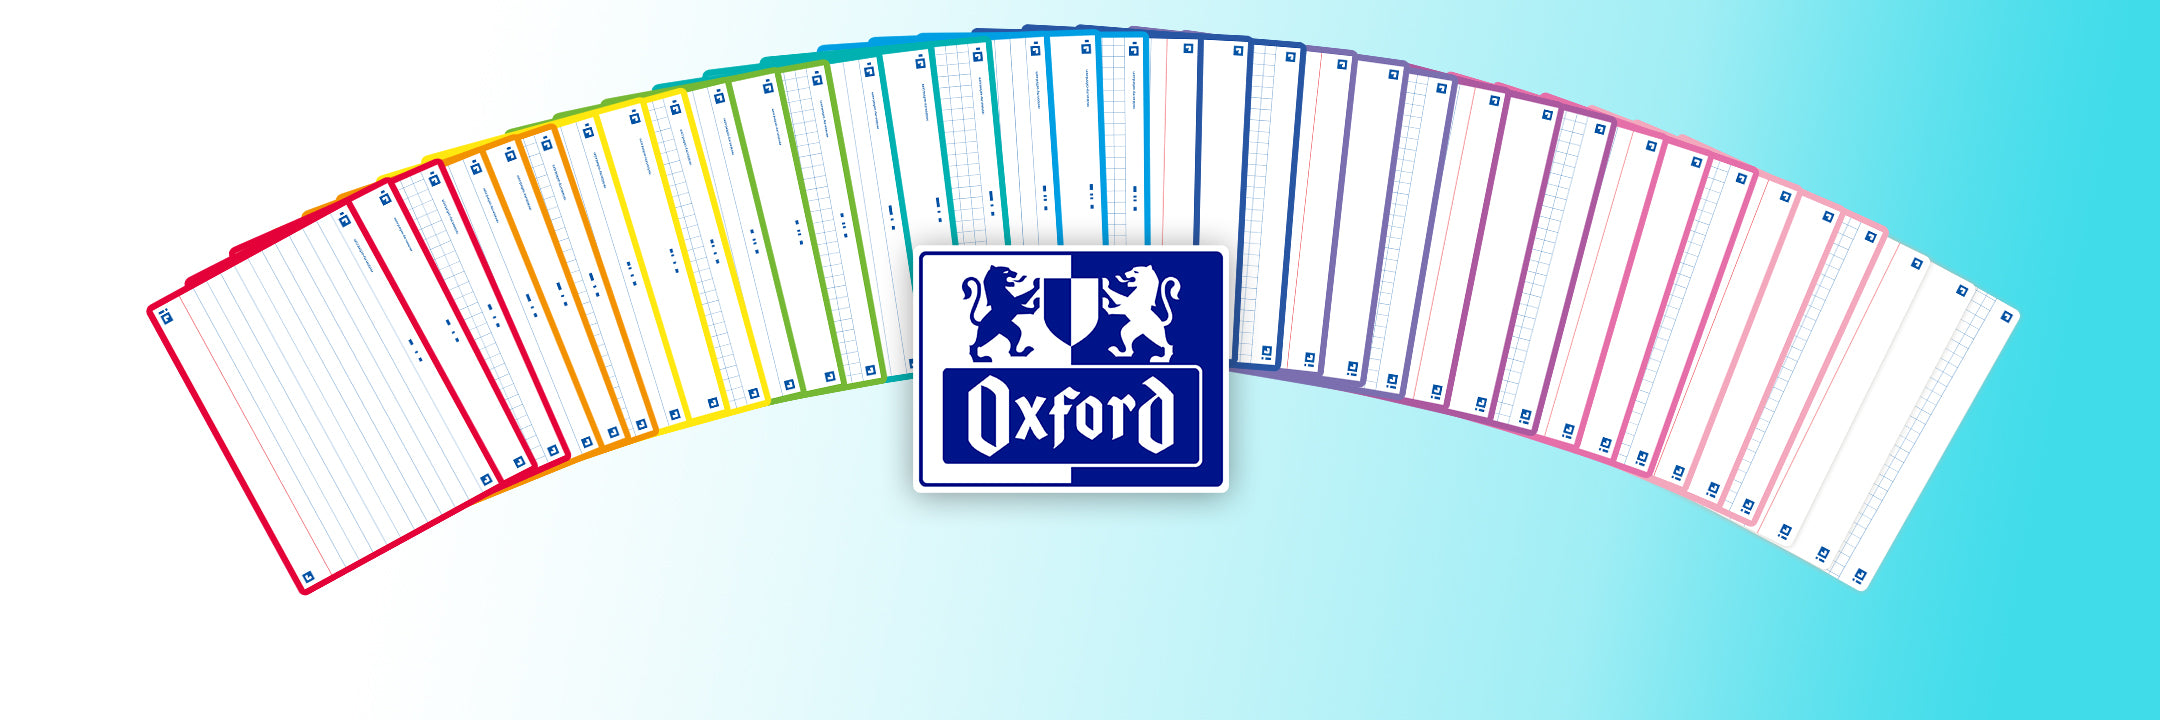 Oxford flash card